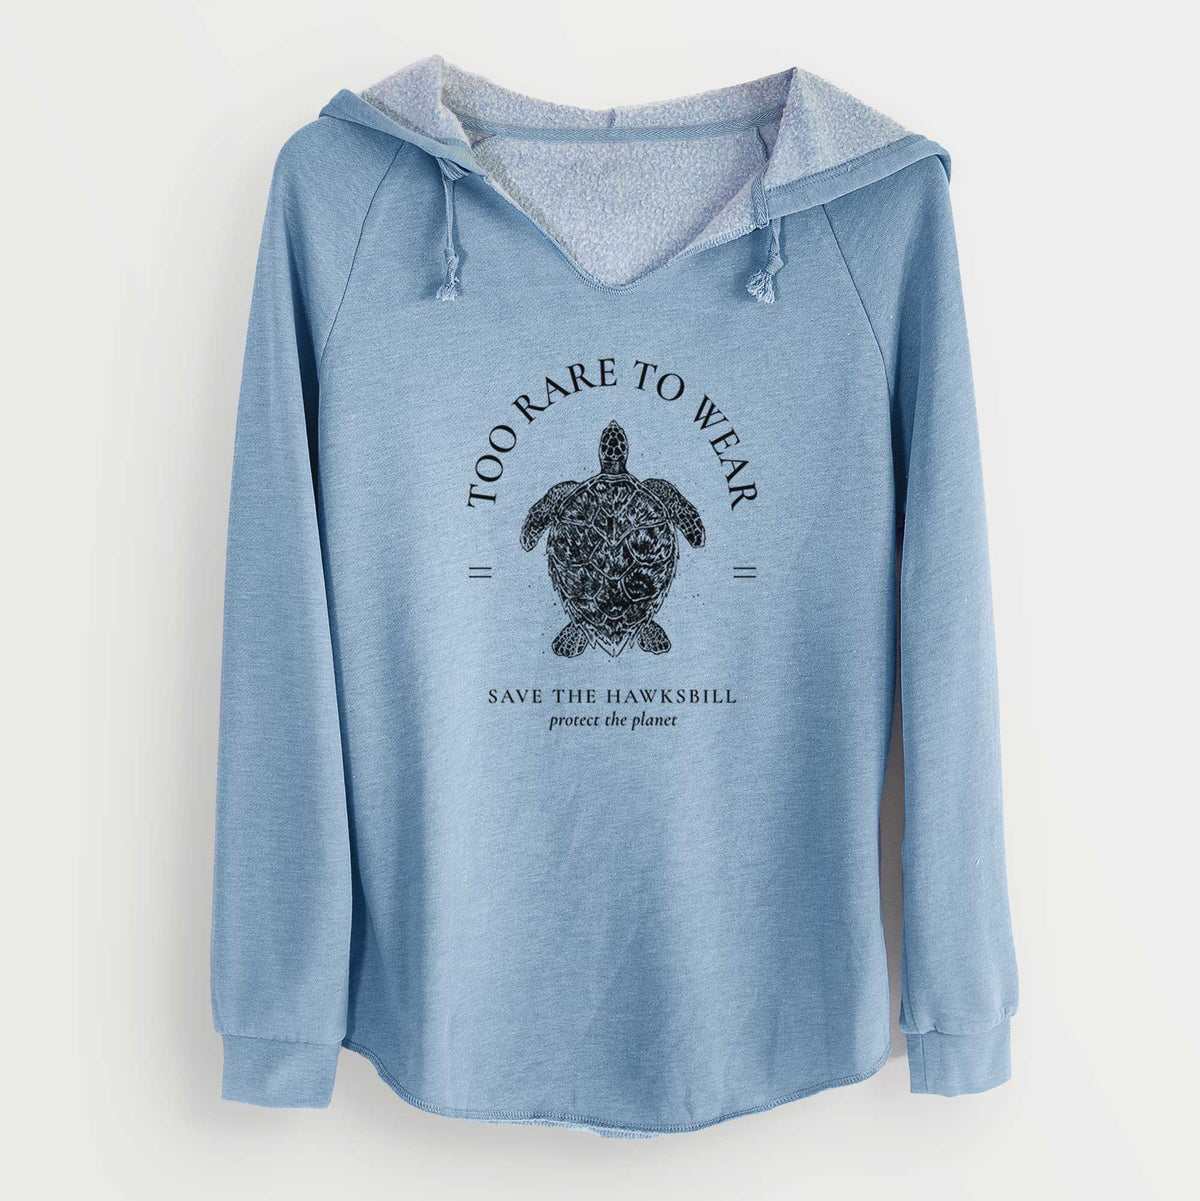 Too Rare to Wear - Save the Hawksbill - Cali Wave Hooded Sweatshirt